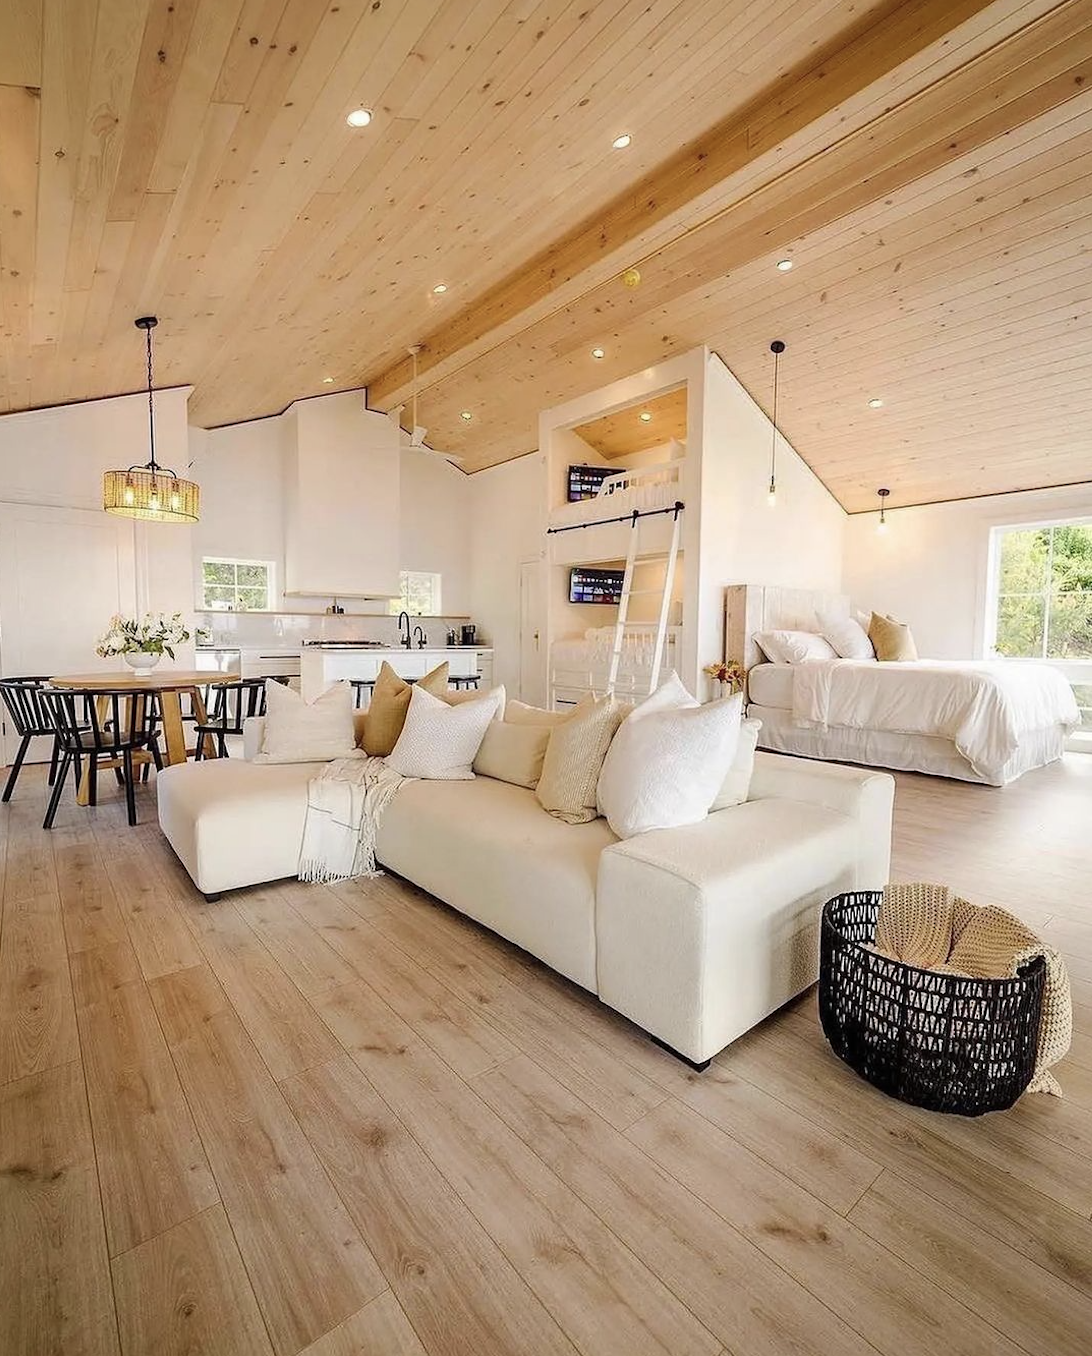 Sleek and Modern Open-Plan Cabin Interior